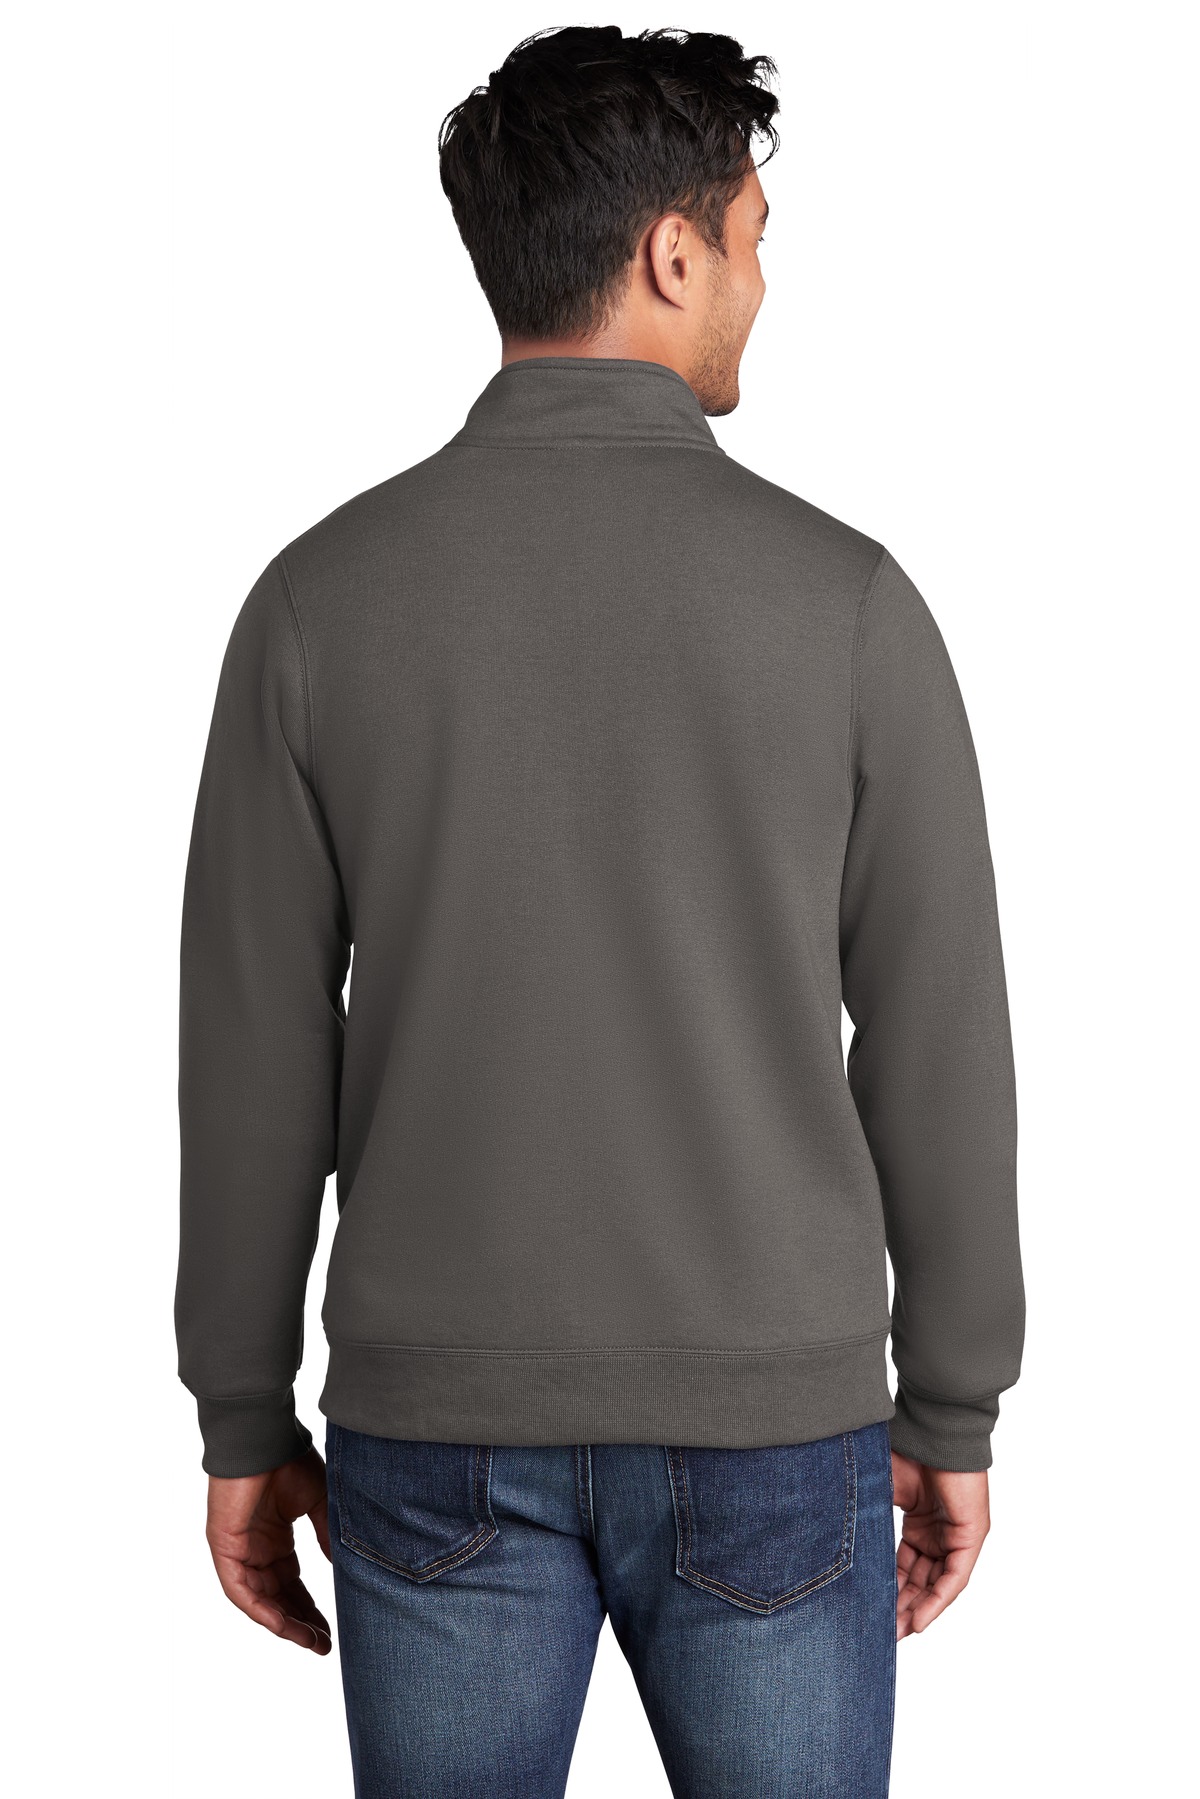 Port & Company Core Fleece Cadet Full-Zip Sweatshirt PC78FZ - image 2 of 4